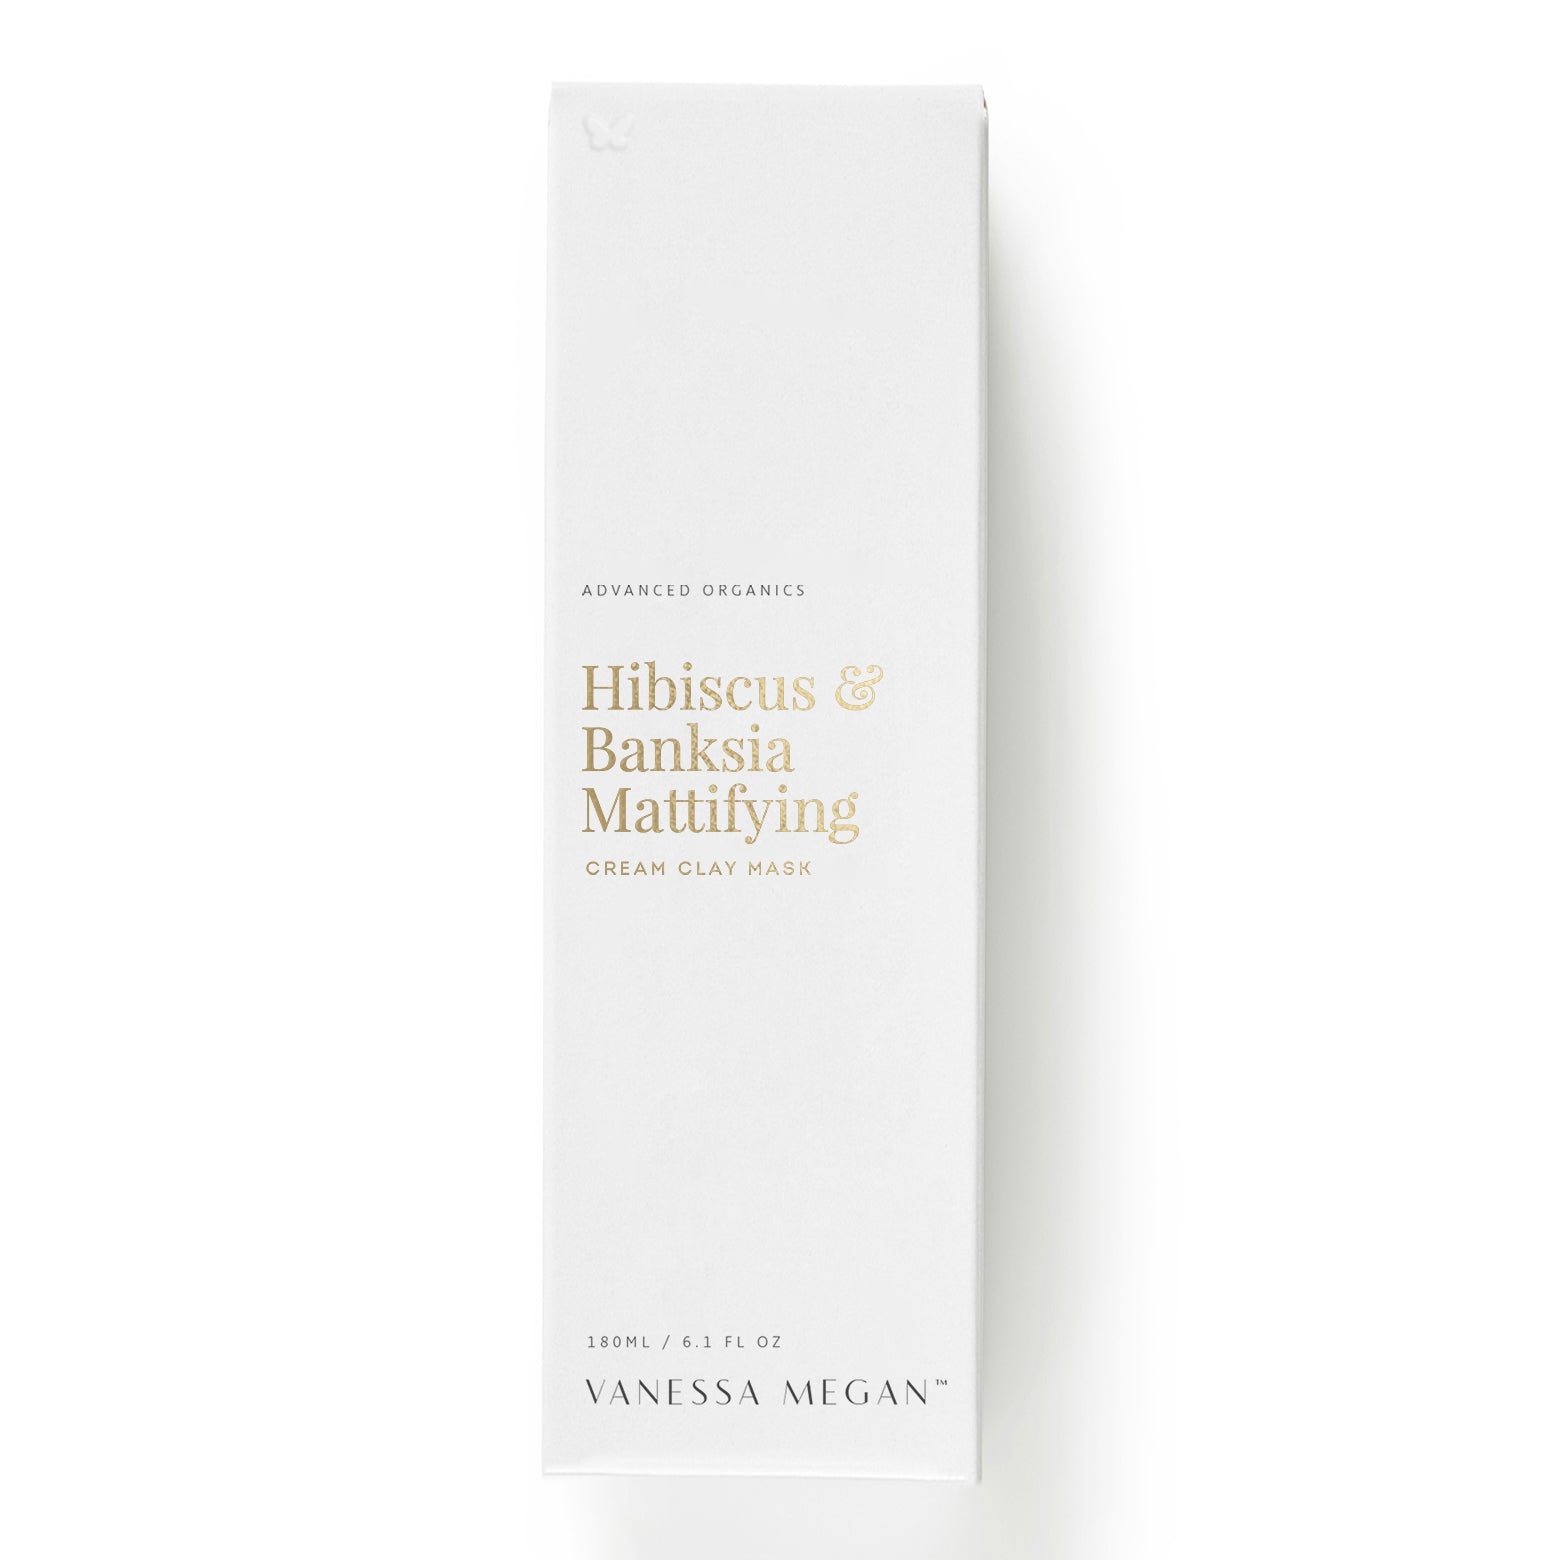 Hibiscus & Banksia Mattifying Cream Clay Mask 180ml